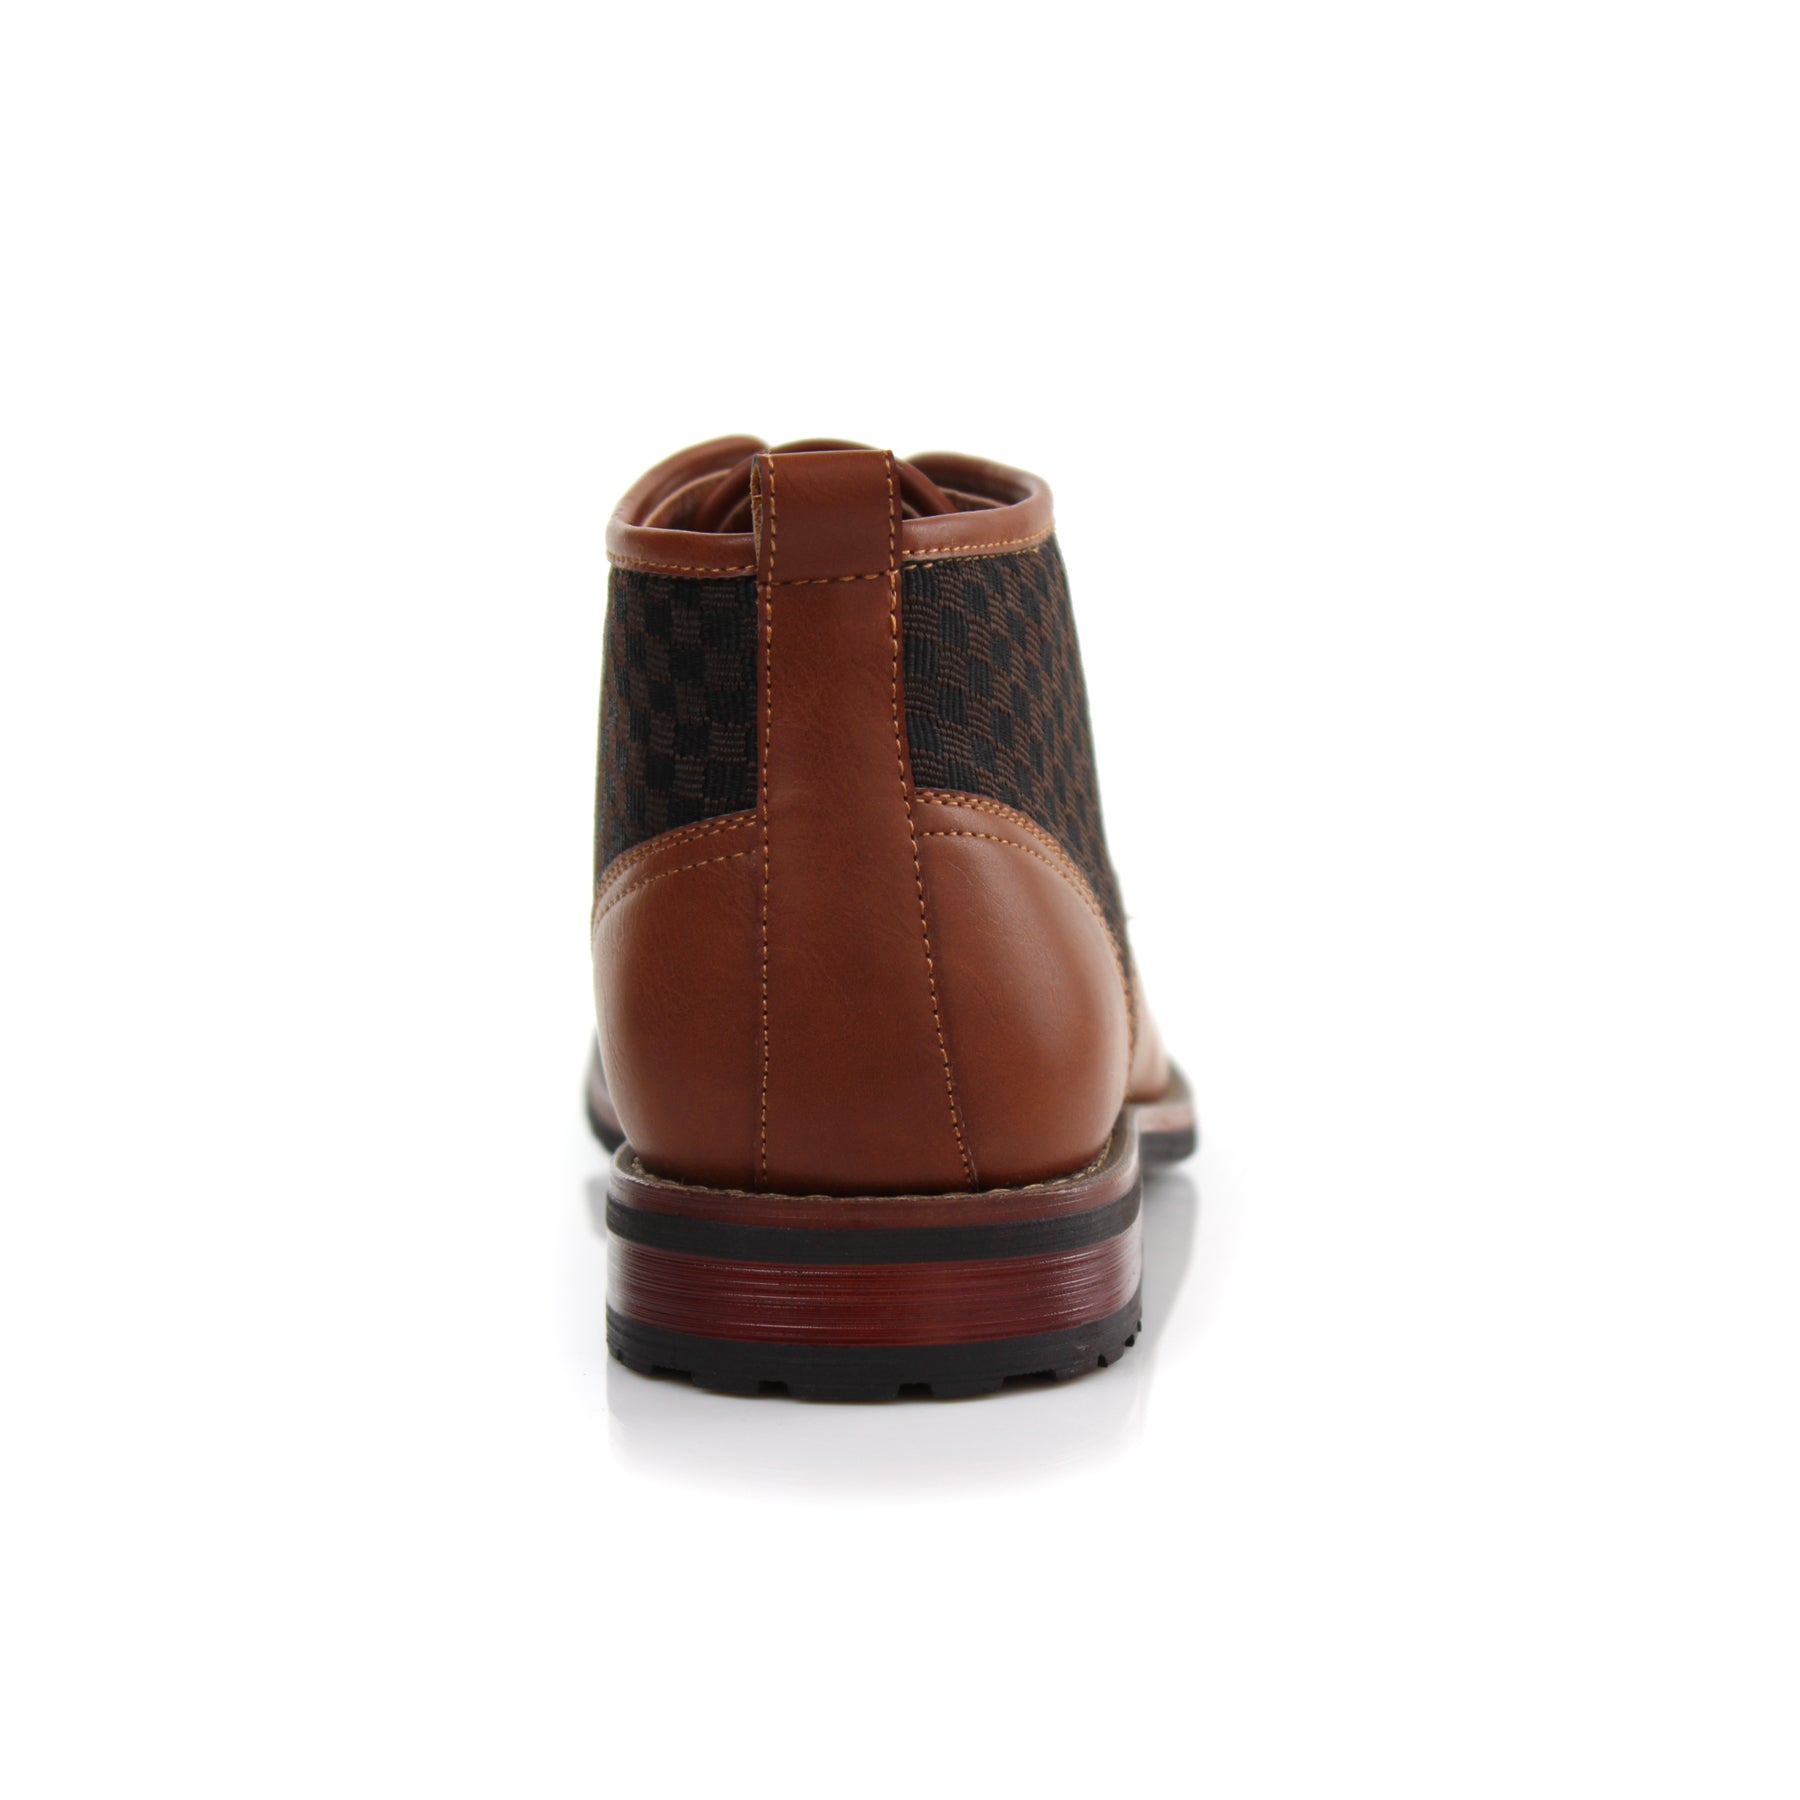 Plaid Contrast Chukka Boots | Ryan by Ferro Aldo | Conal Footwear | Back Angle View